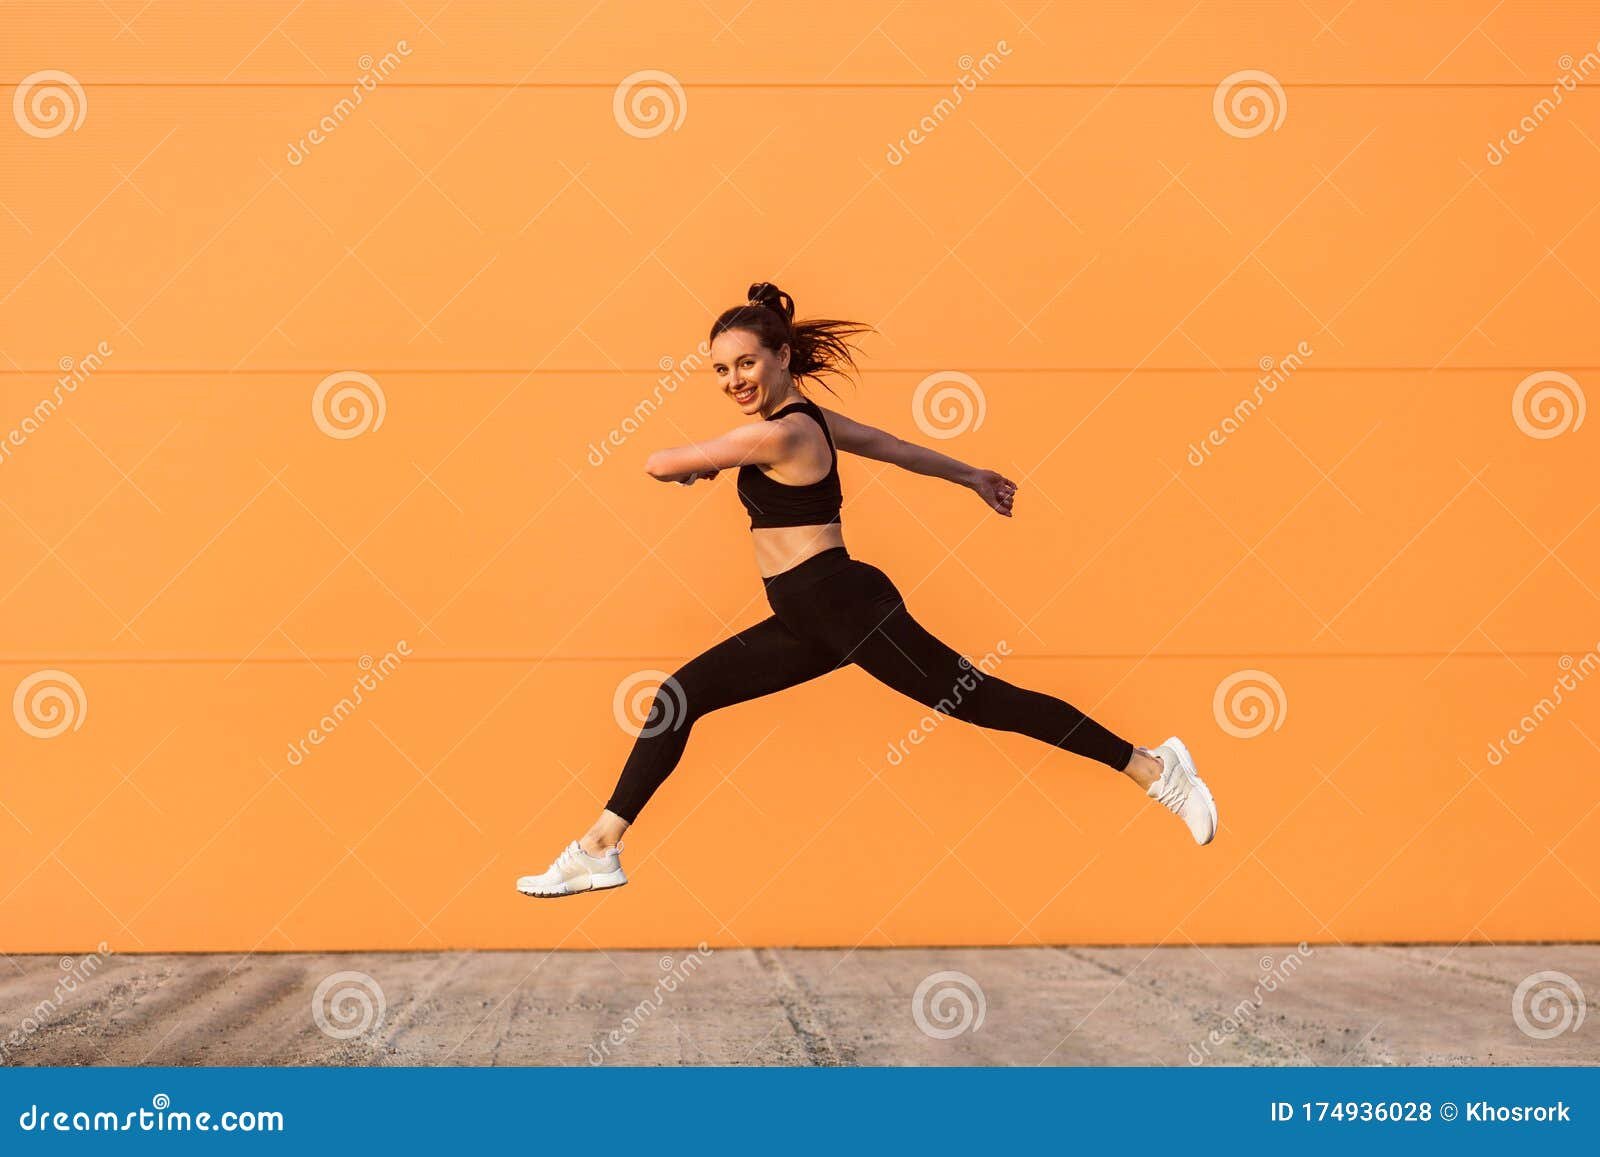 mujer corriendo con ropa deportiva ajustada